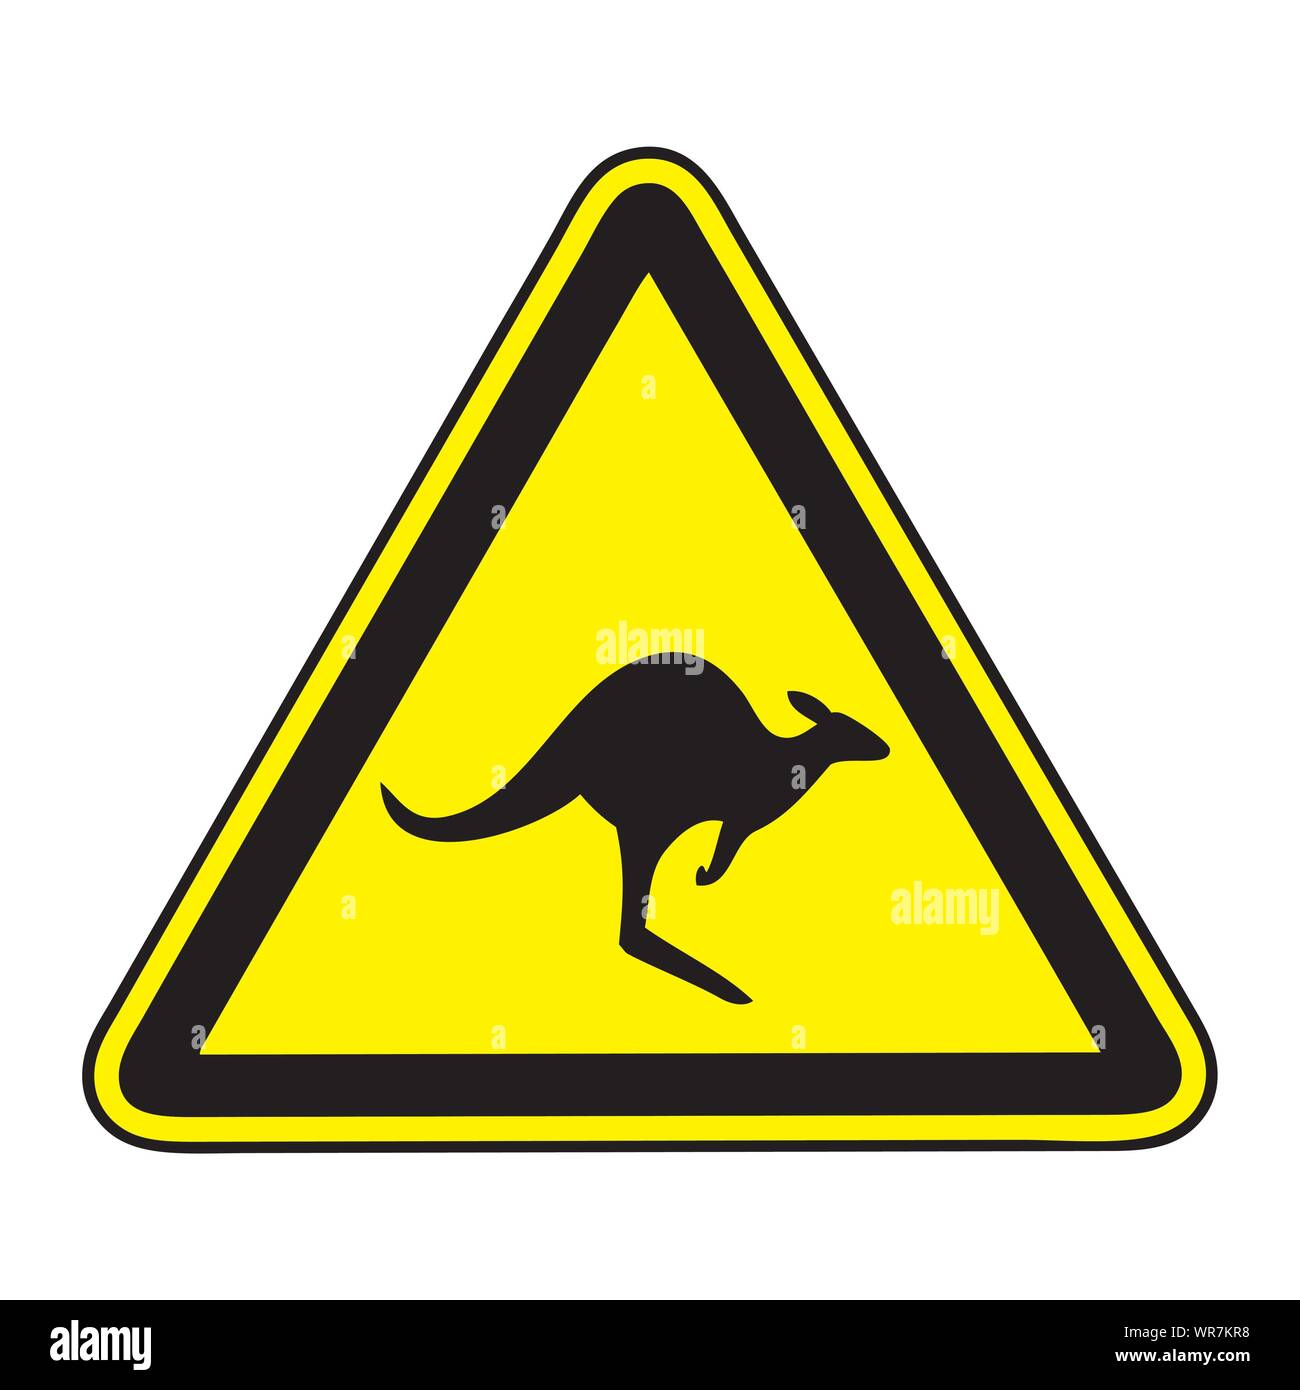 kangroo Illustration de Vecteur